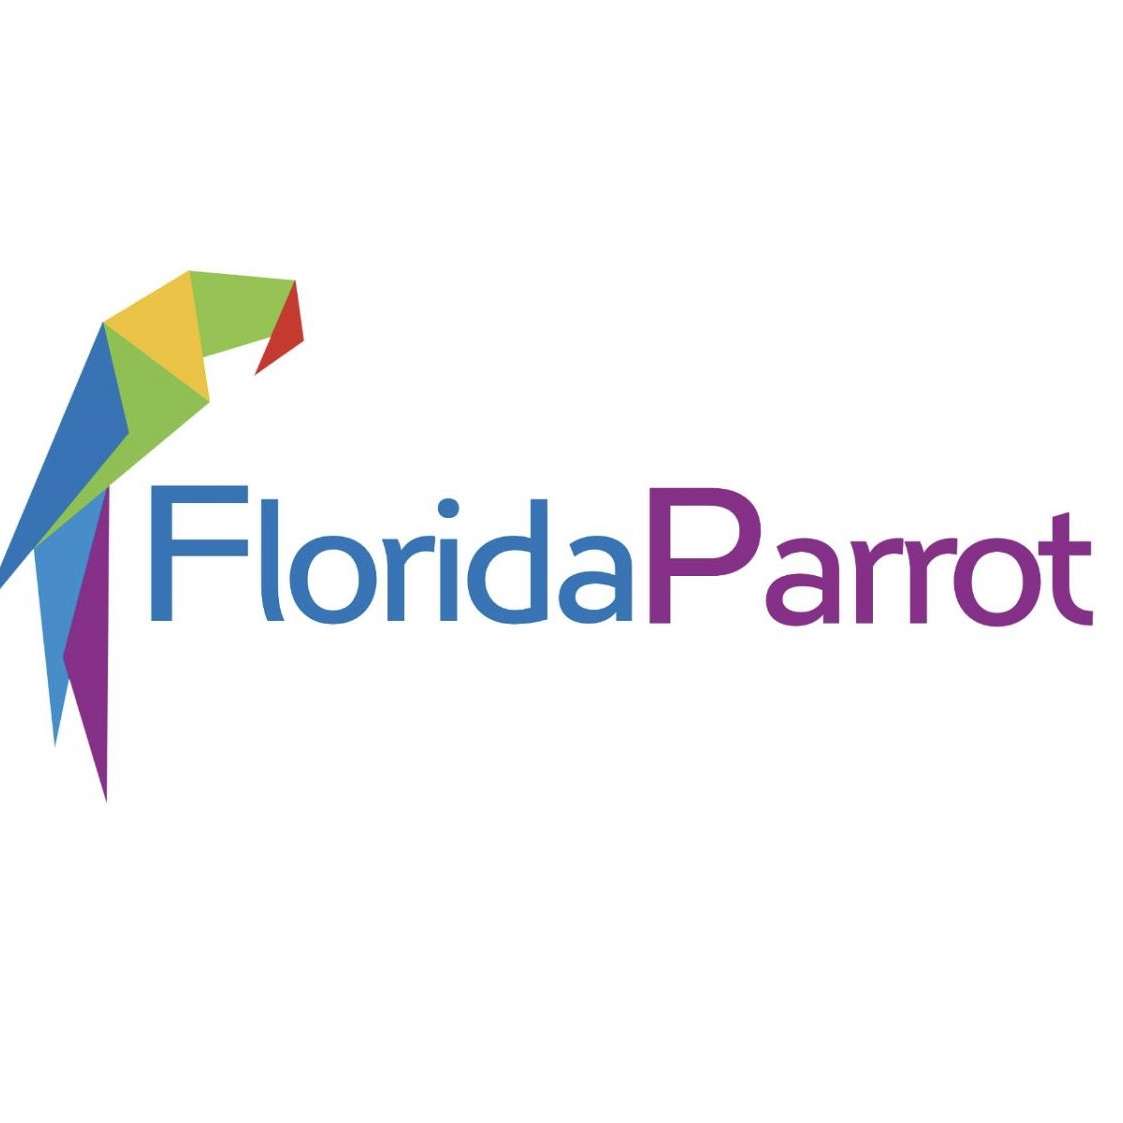 Florida Parrot Co